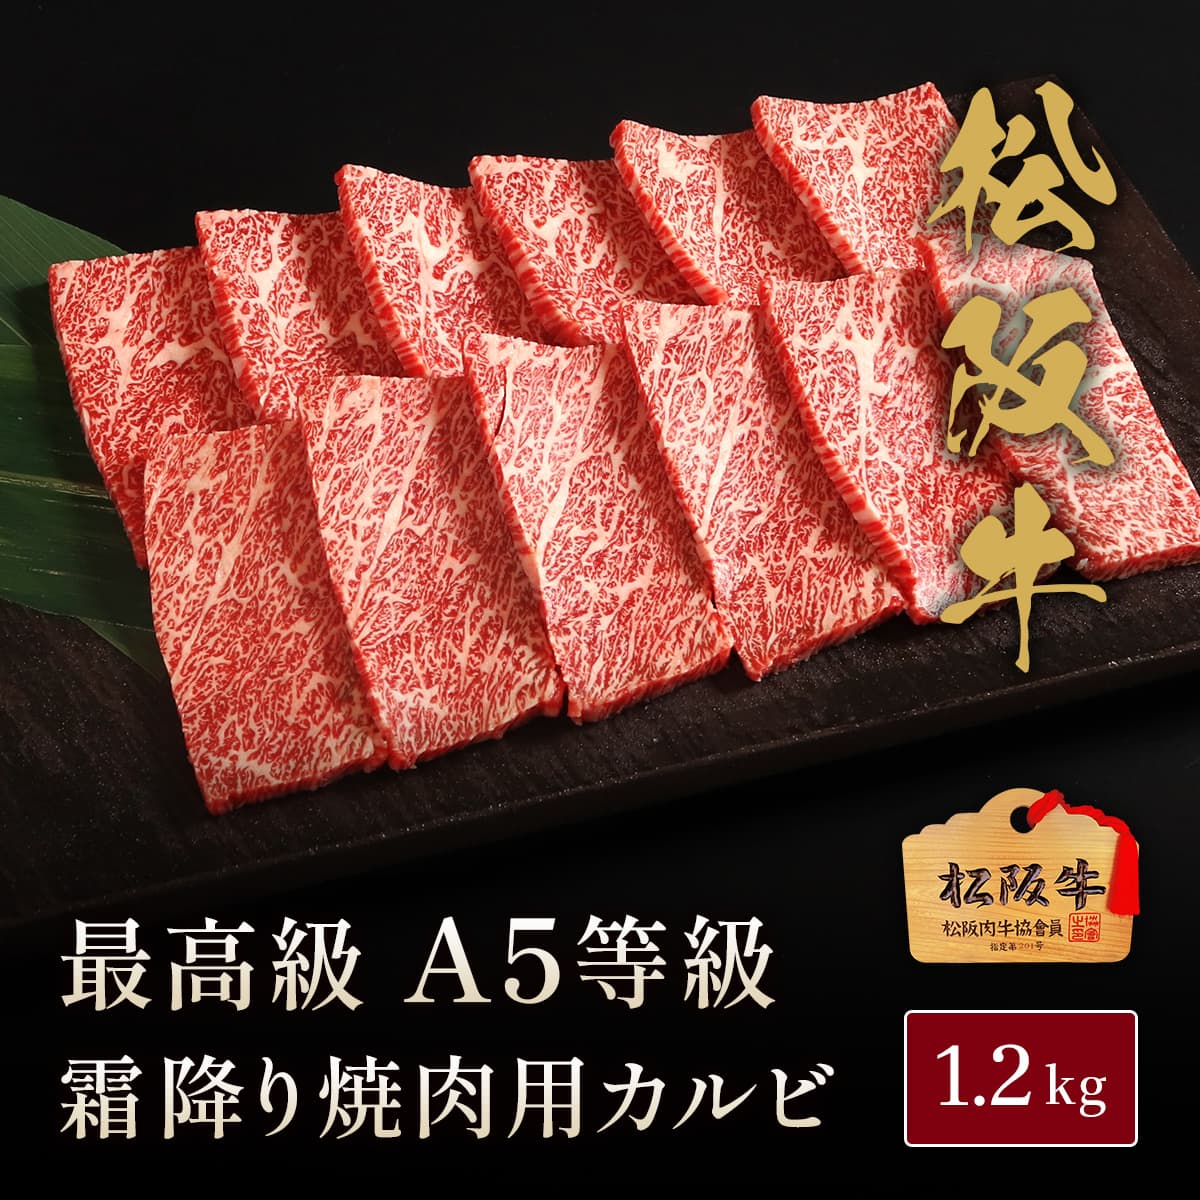 松阪牛 A5等級 焼肉 カルビ 1,200g